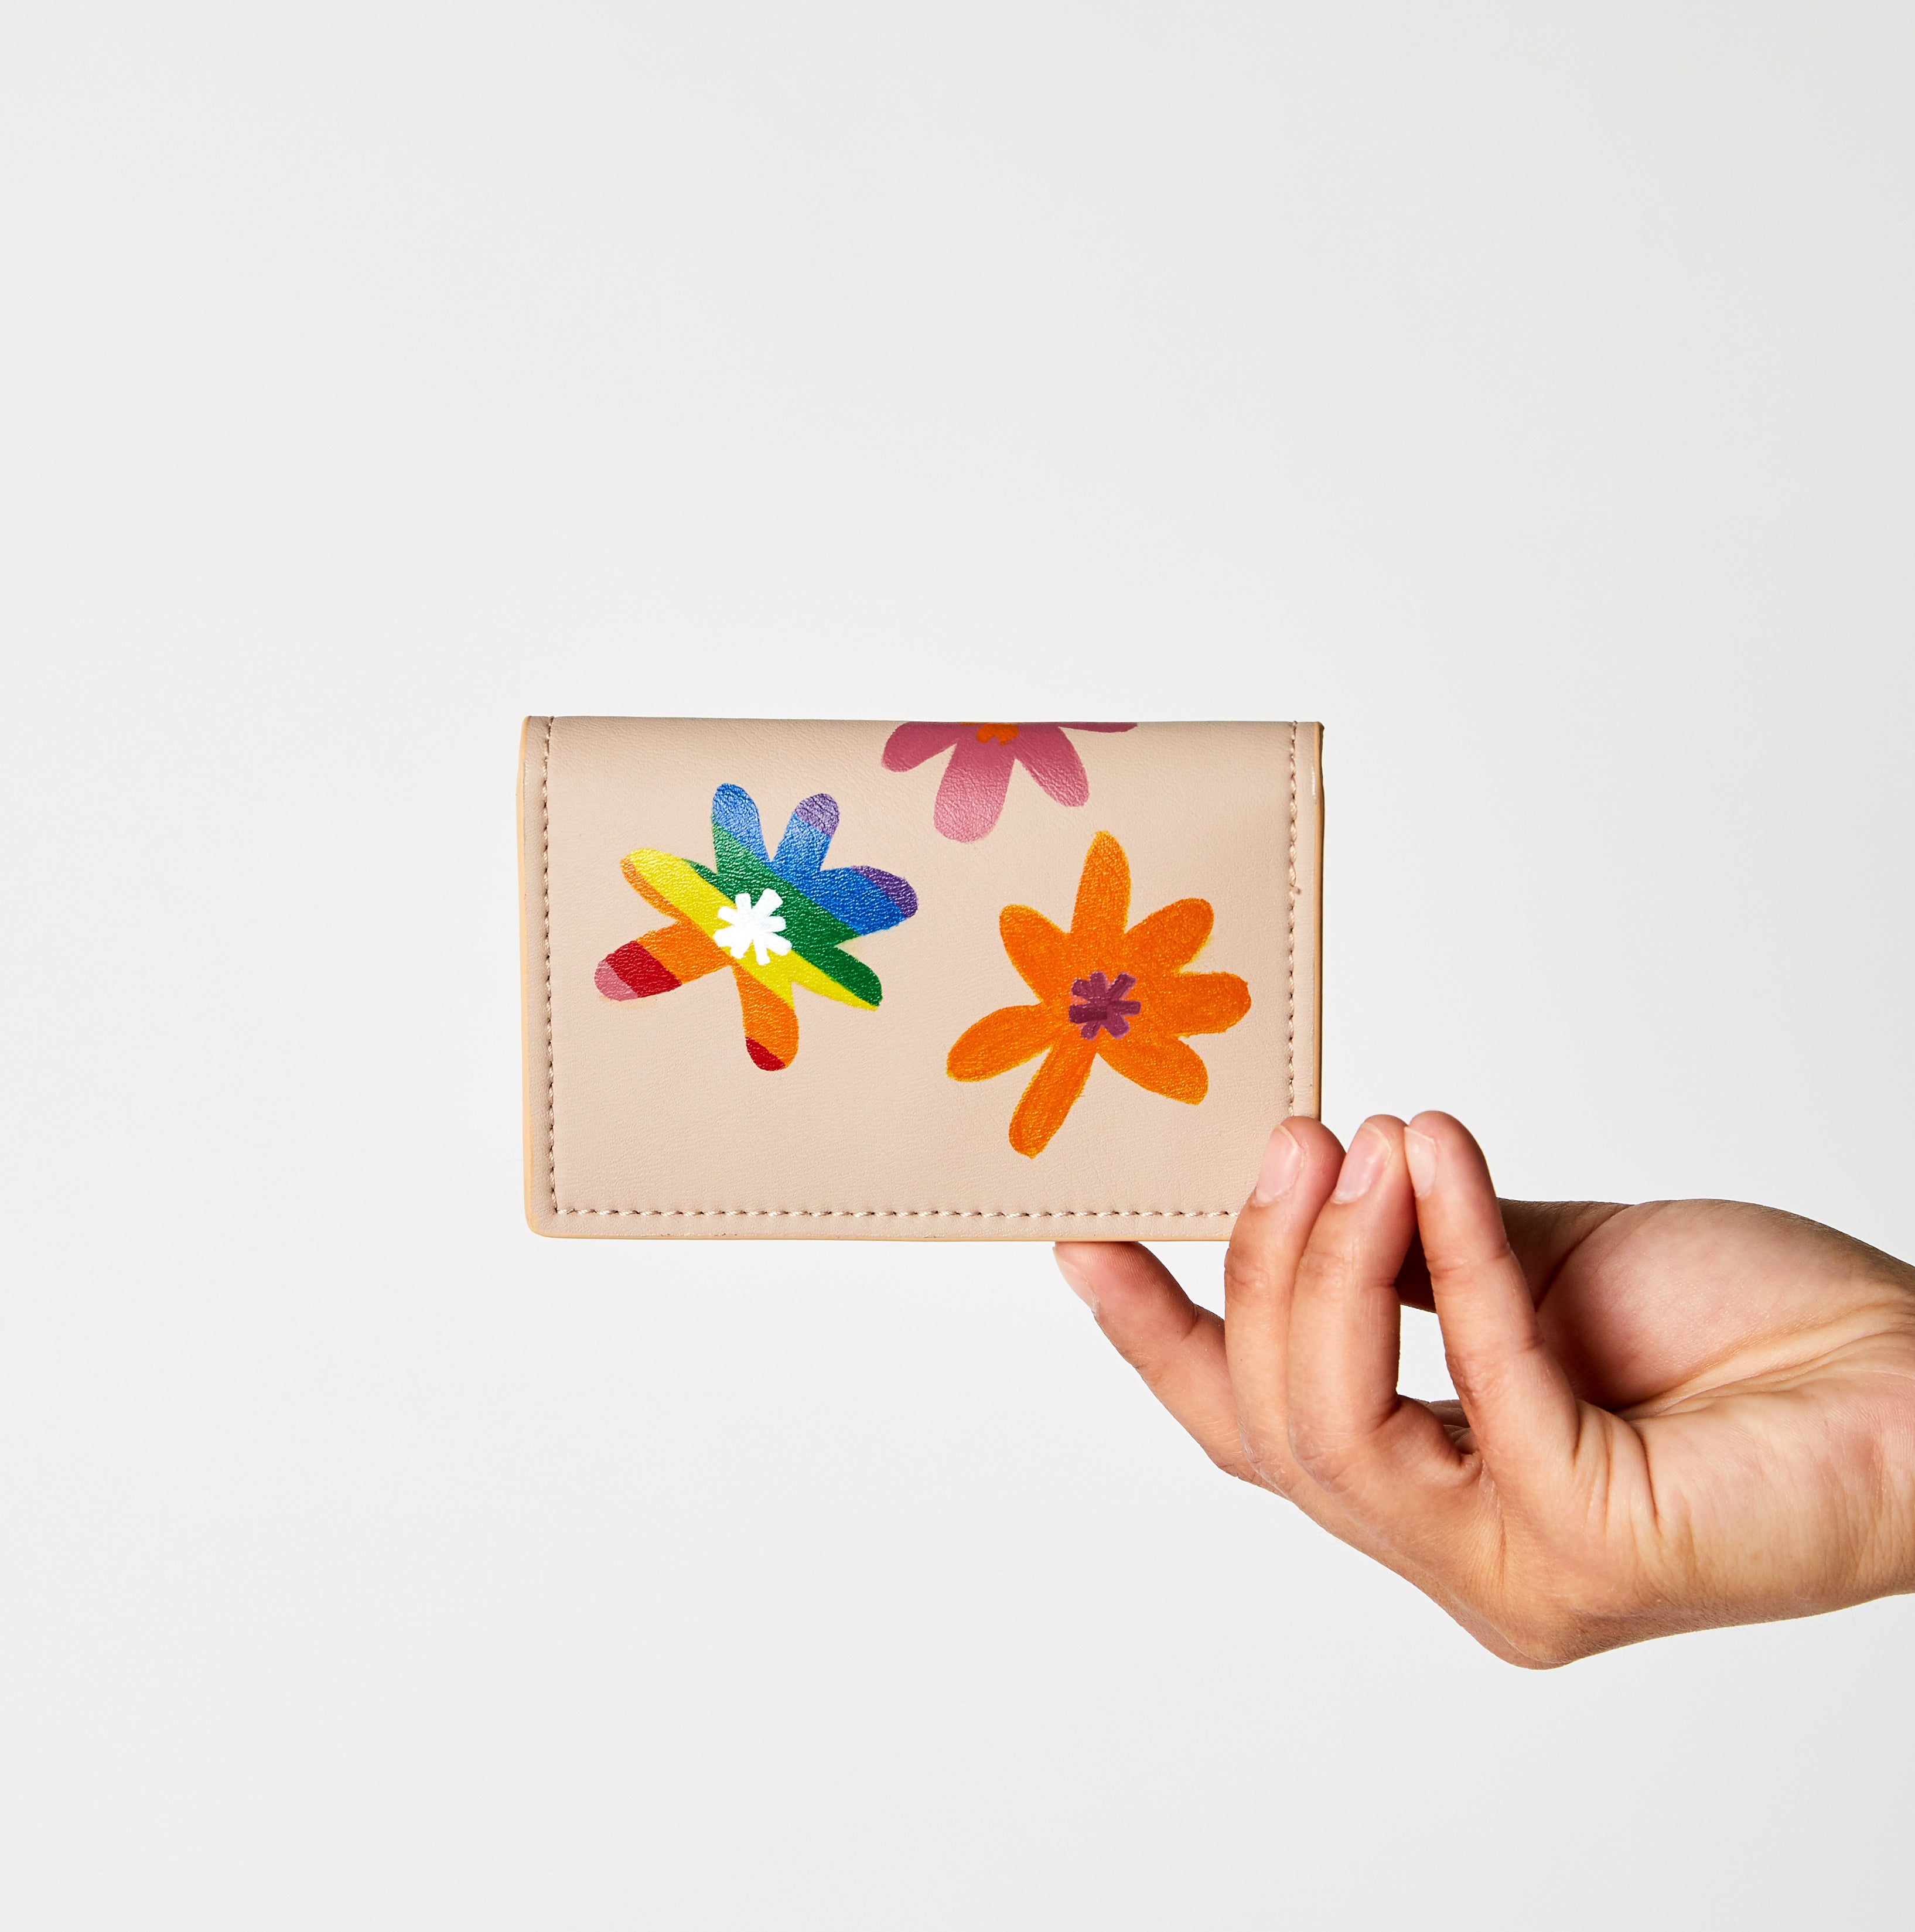 pride flower hand painted by LGBTQ artist on vegan sustainable cardholder